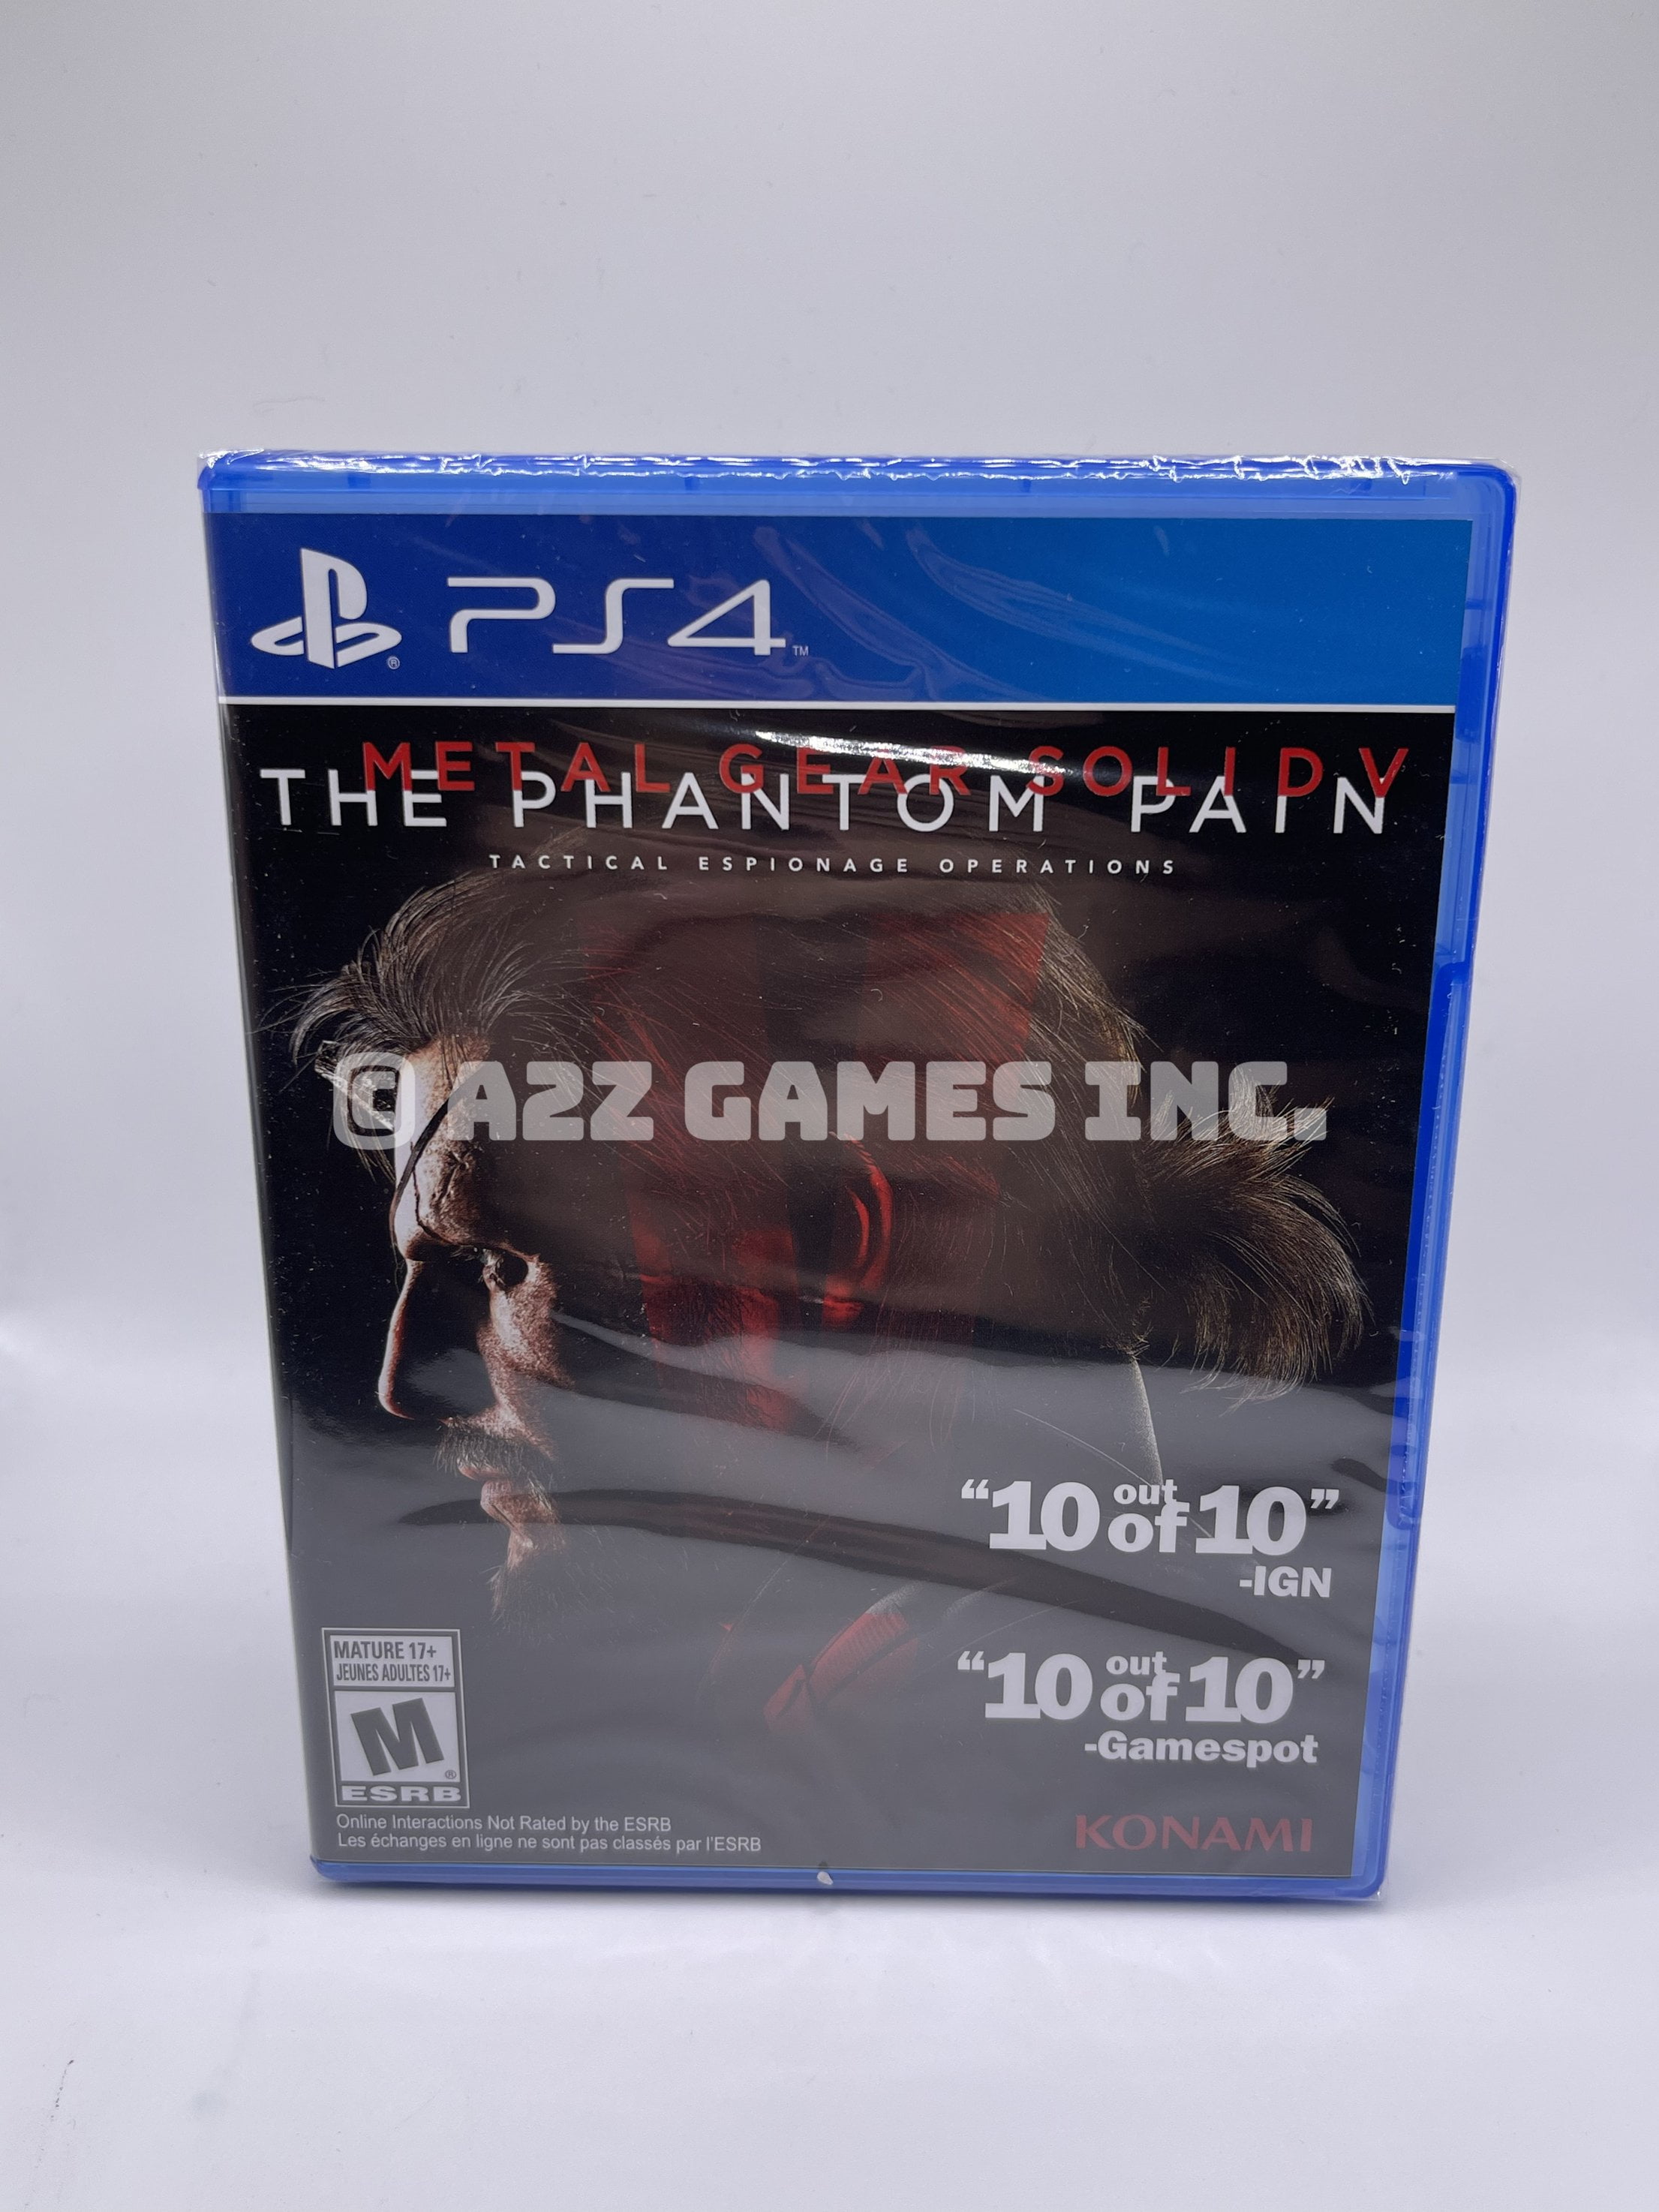 Metal Gear Solid V: The Phantom Pain - IGN